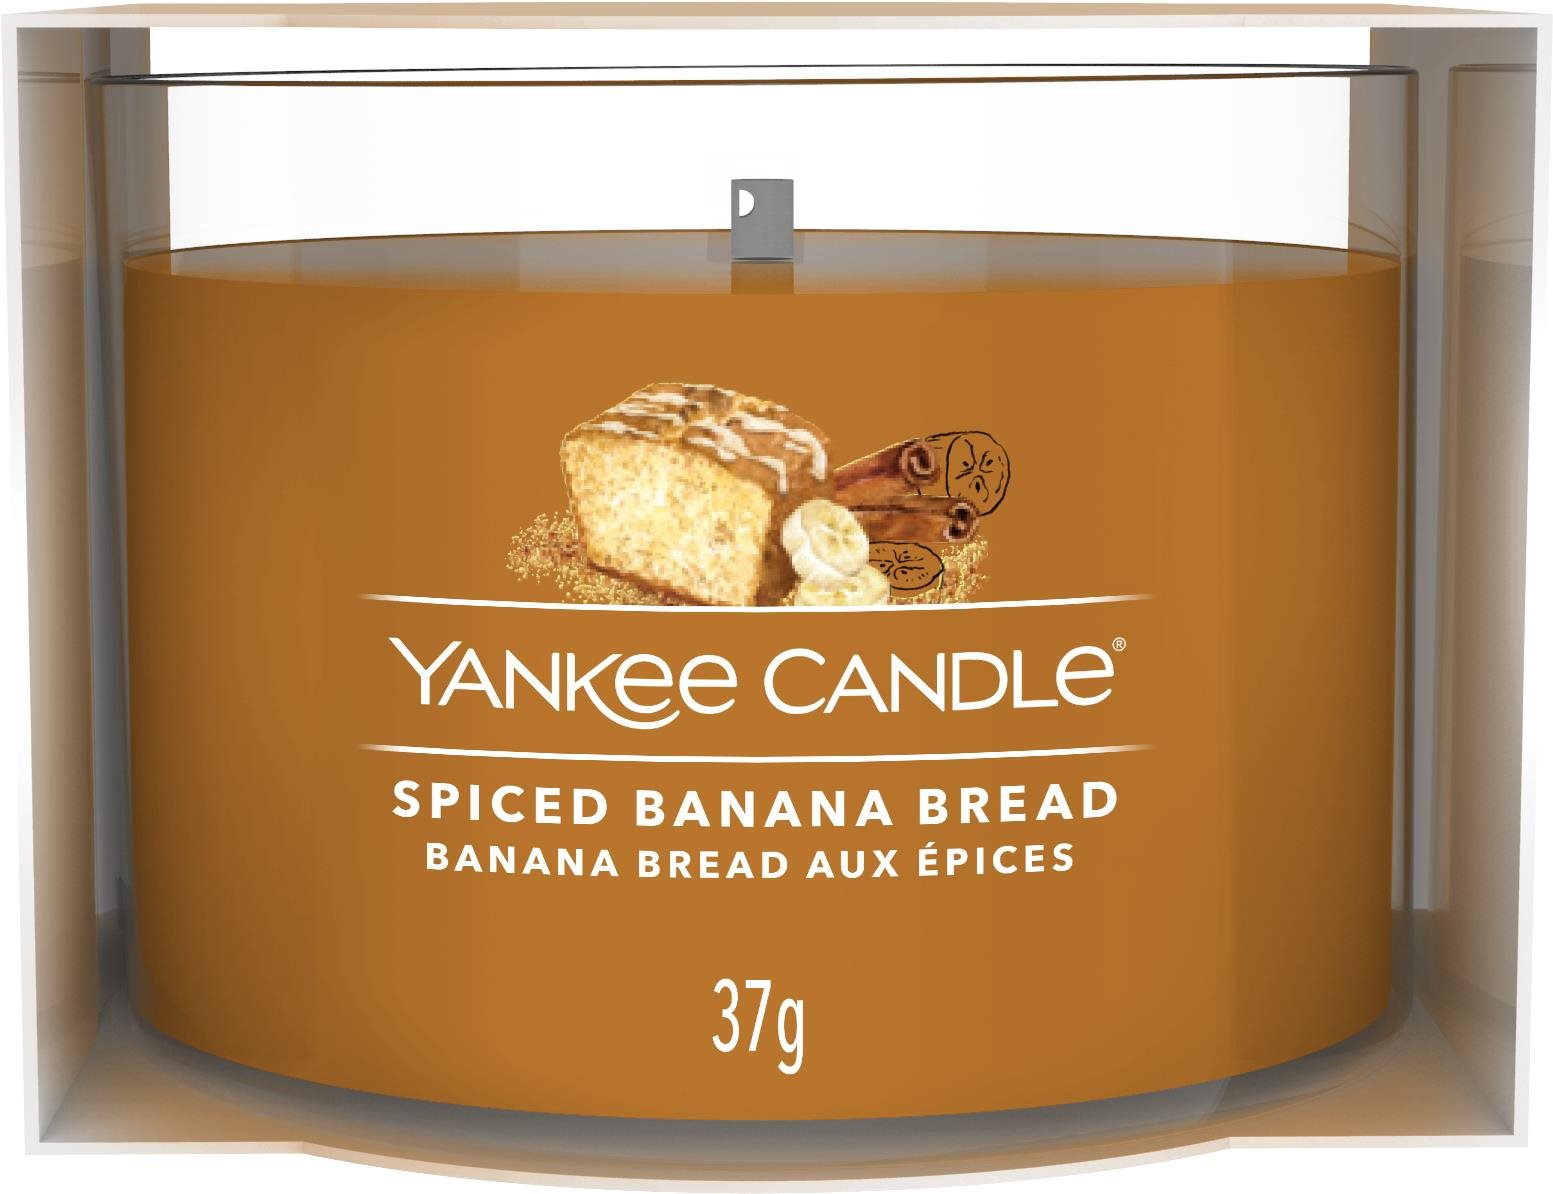 YANKEE CANDLE Spiced Banana Bread 37 g